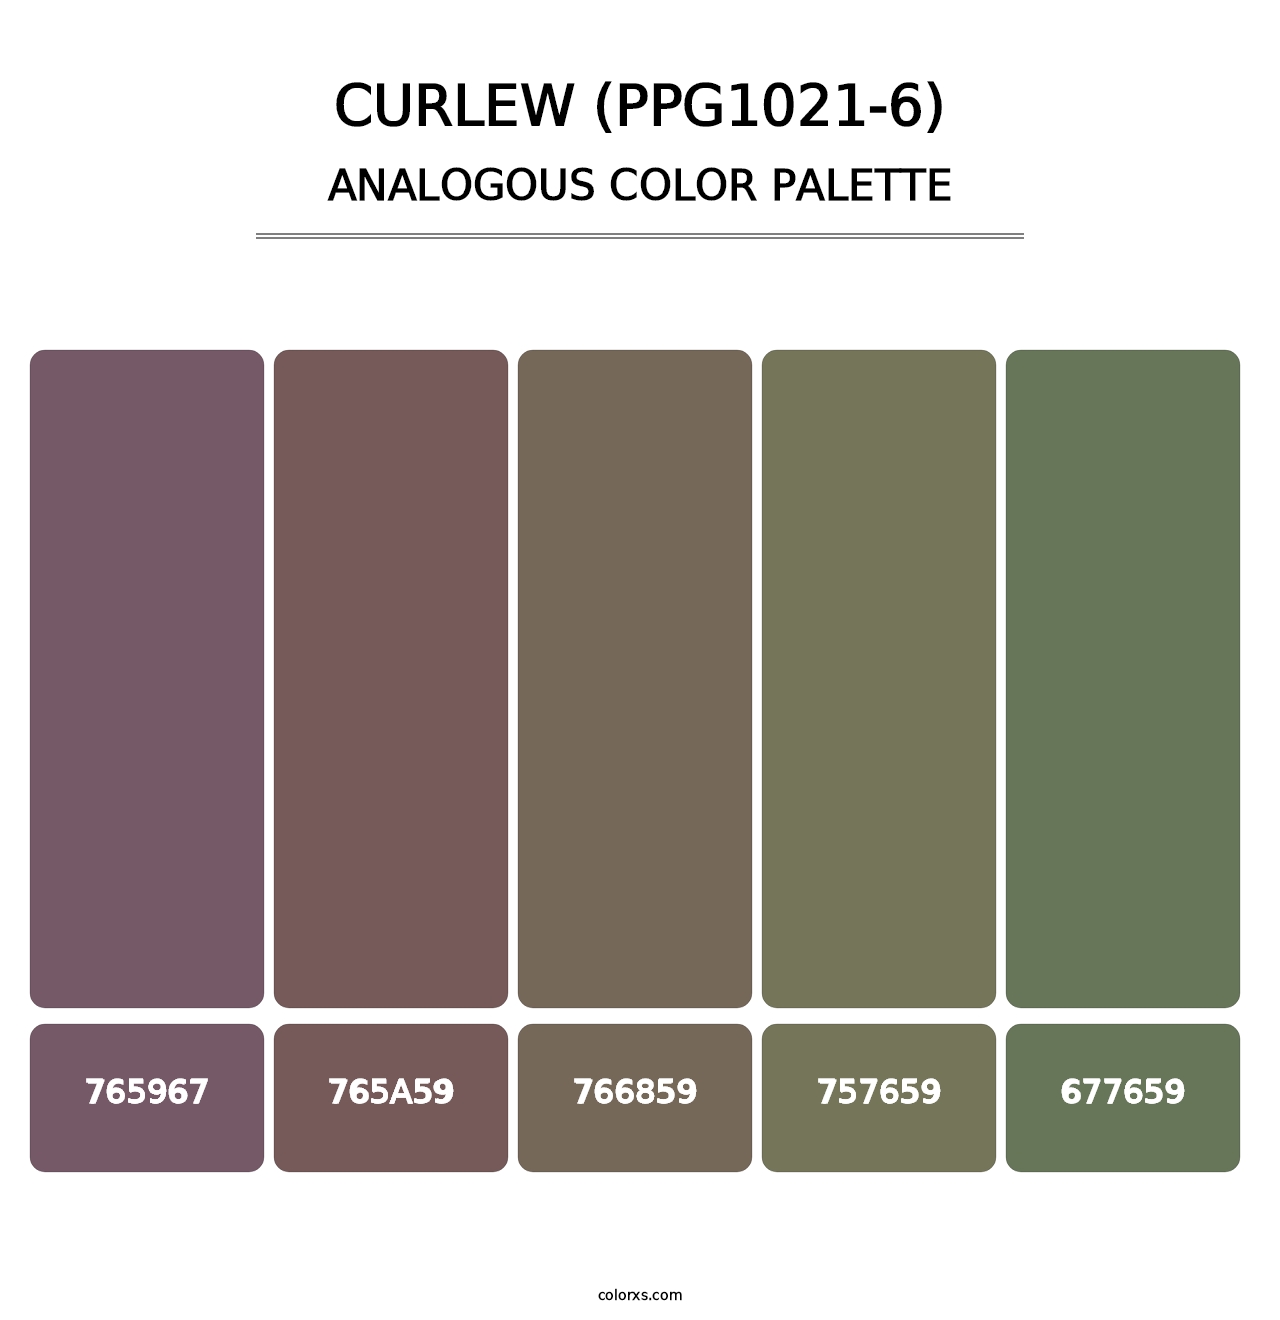 Curlew (PPG1021-6) - Analogous Color Palette